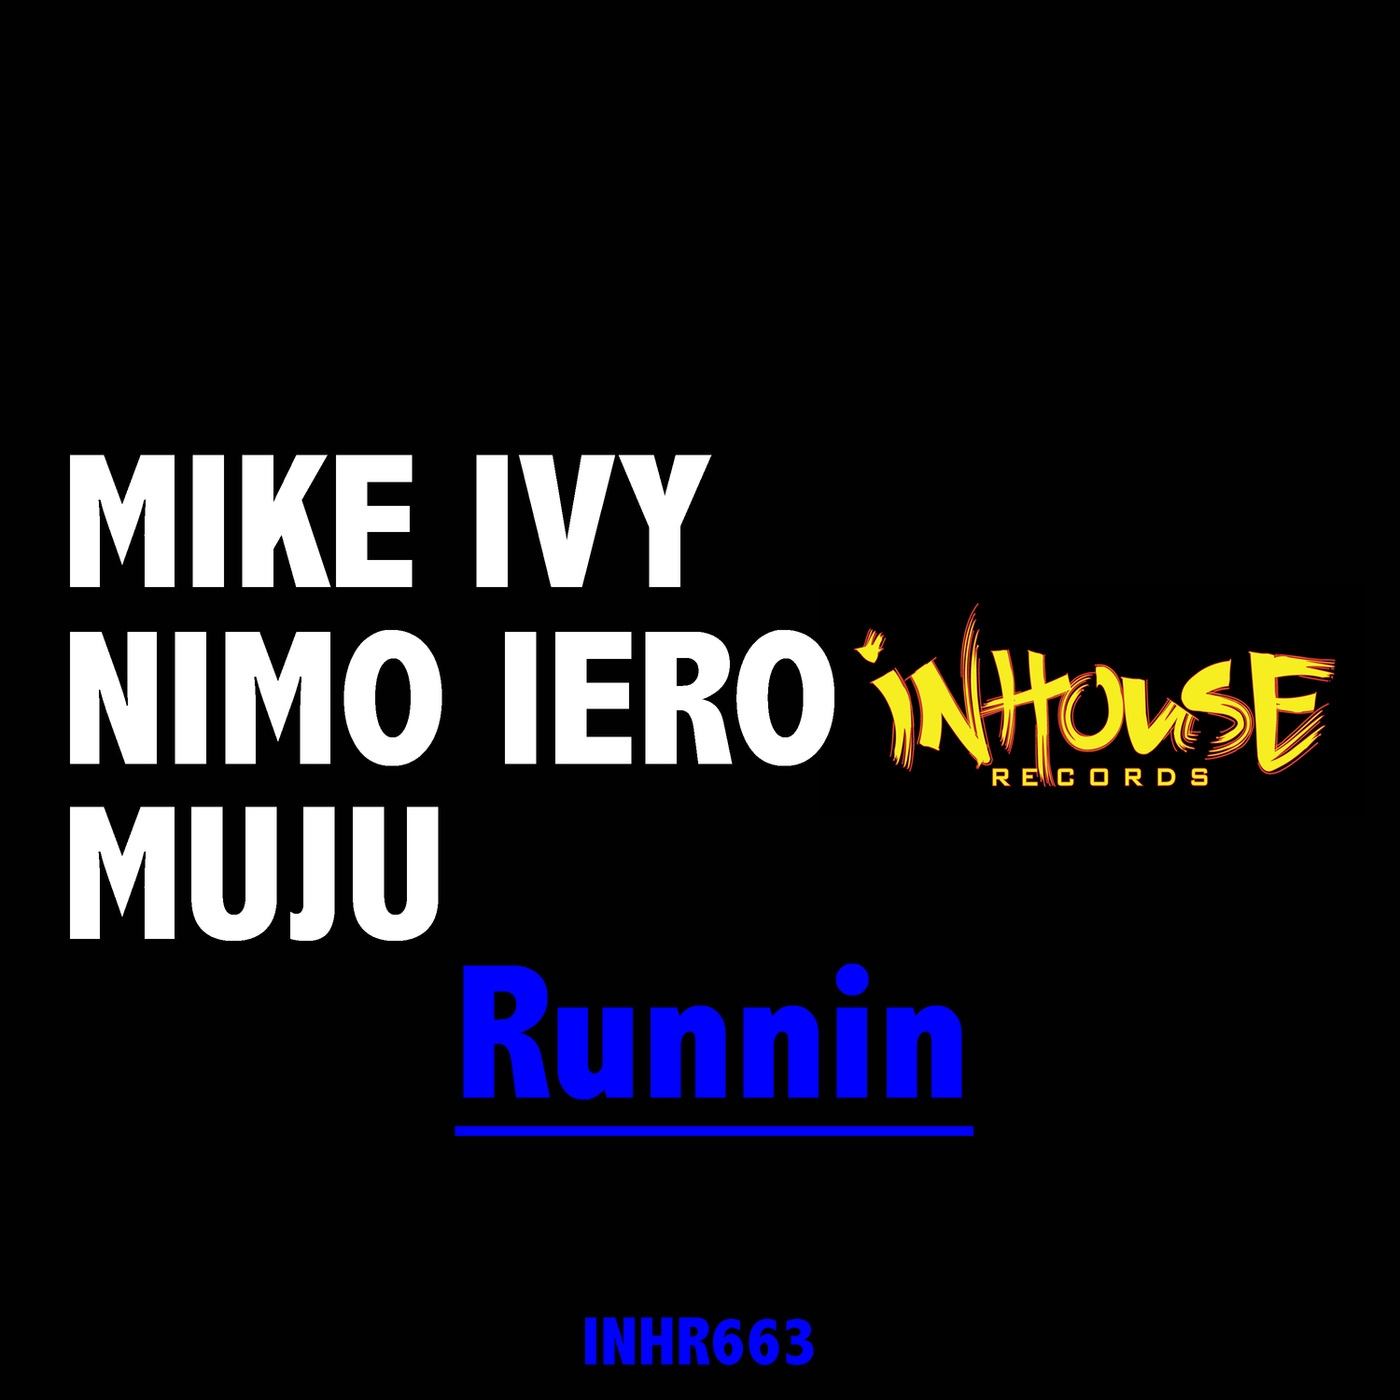 Mike Ivy, Nimo Iero, Muju - Runnin / InHouse Records